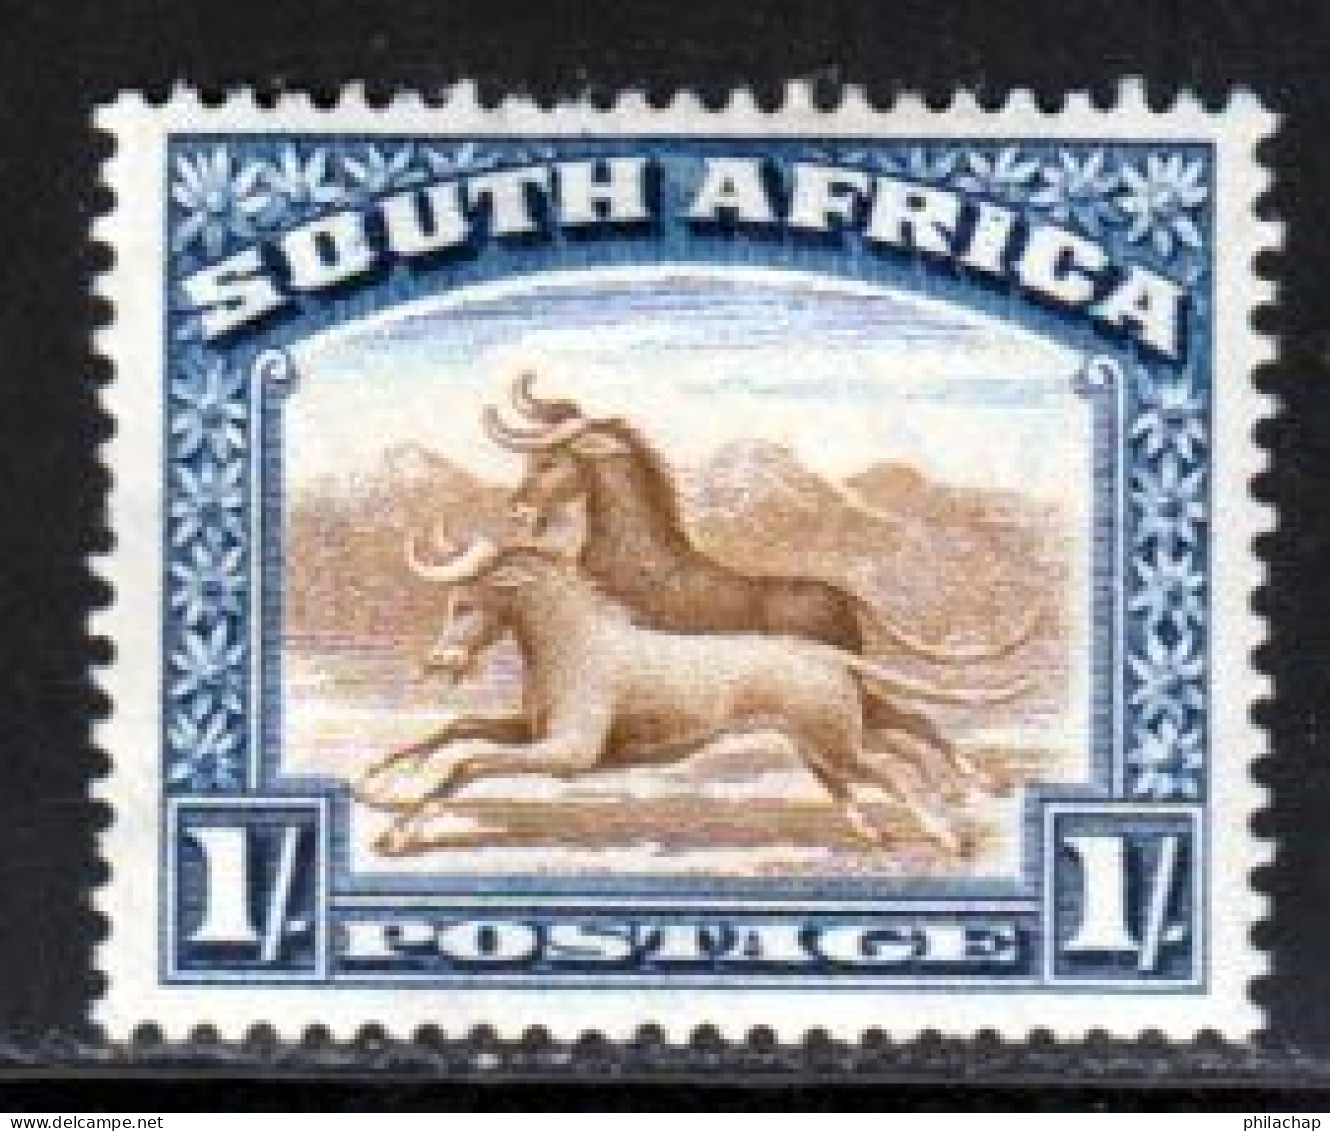 Afrique Du Sud 1927 Yvert 27 * B Charniere(s) - Neufs